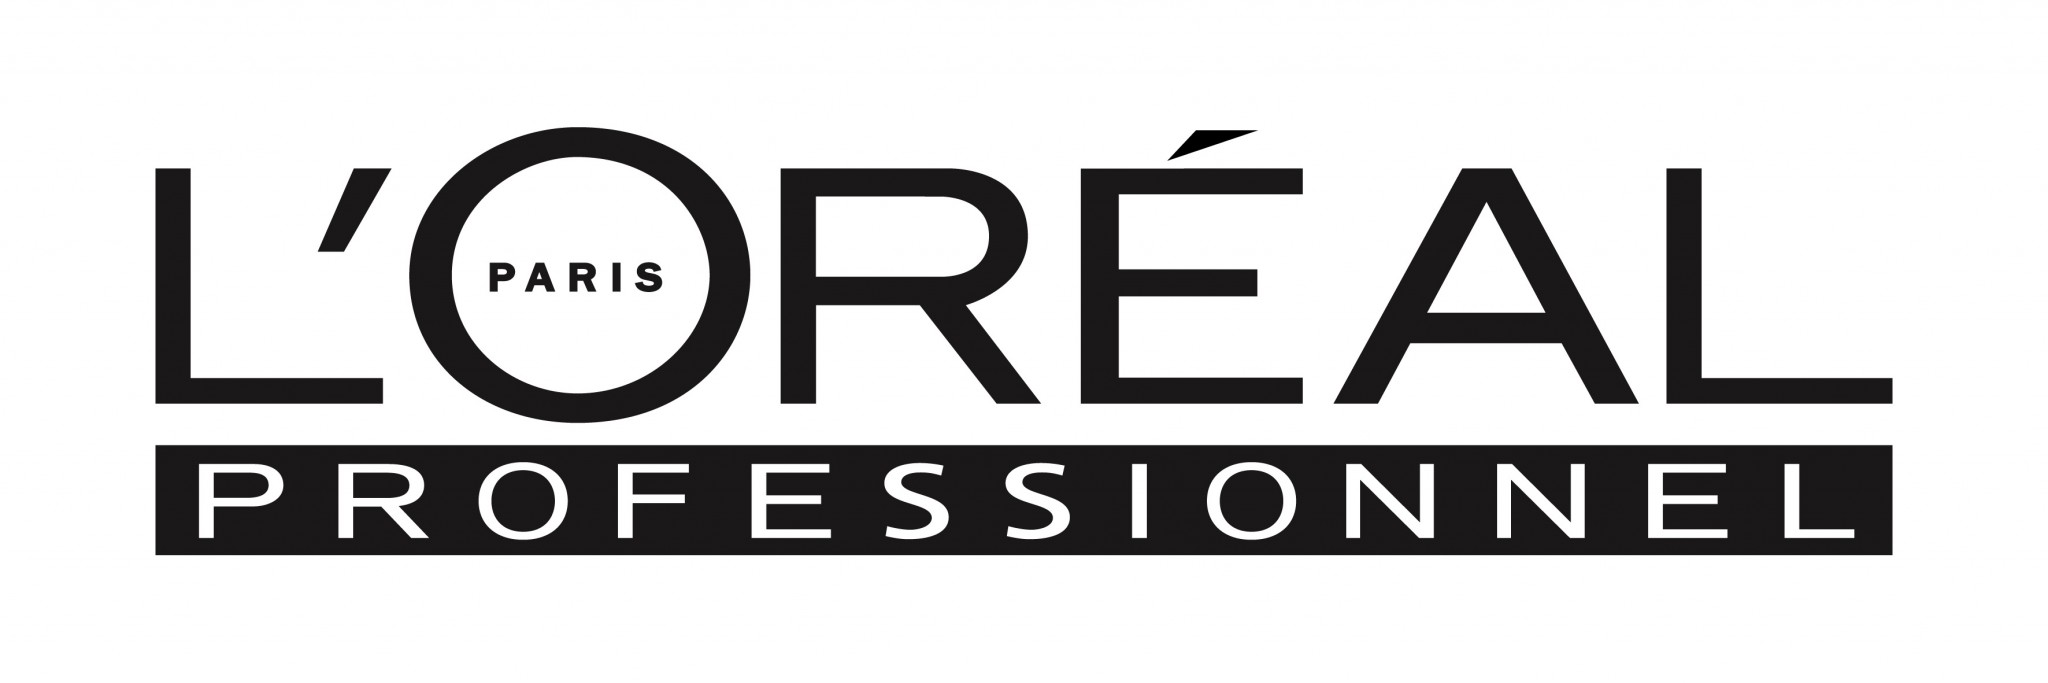 Sponsor logo of L'Oréal Professionnel